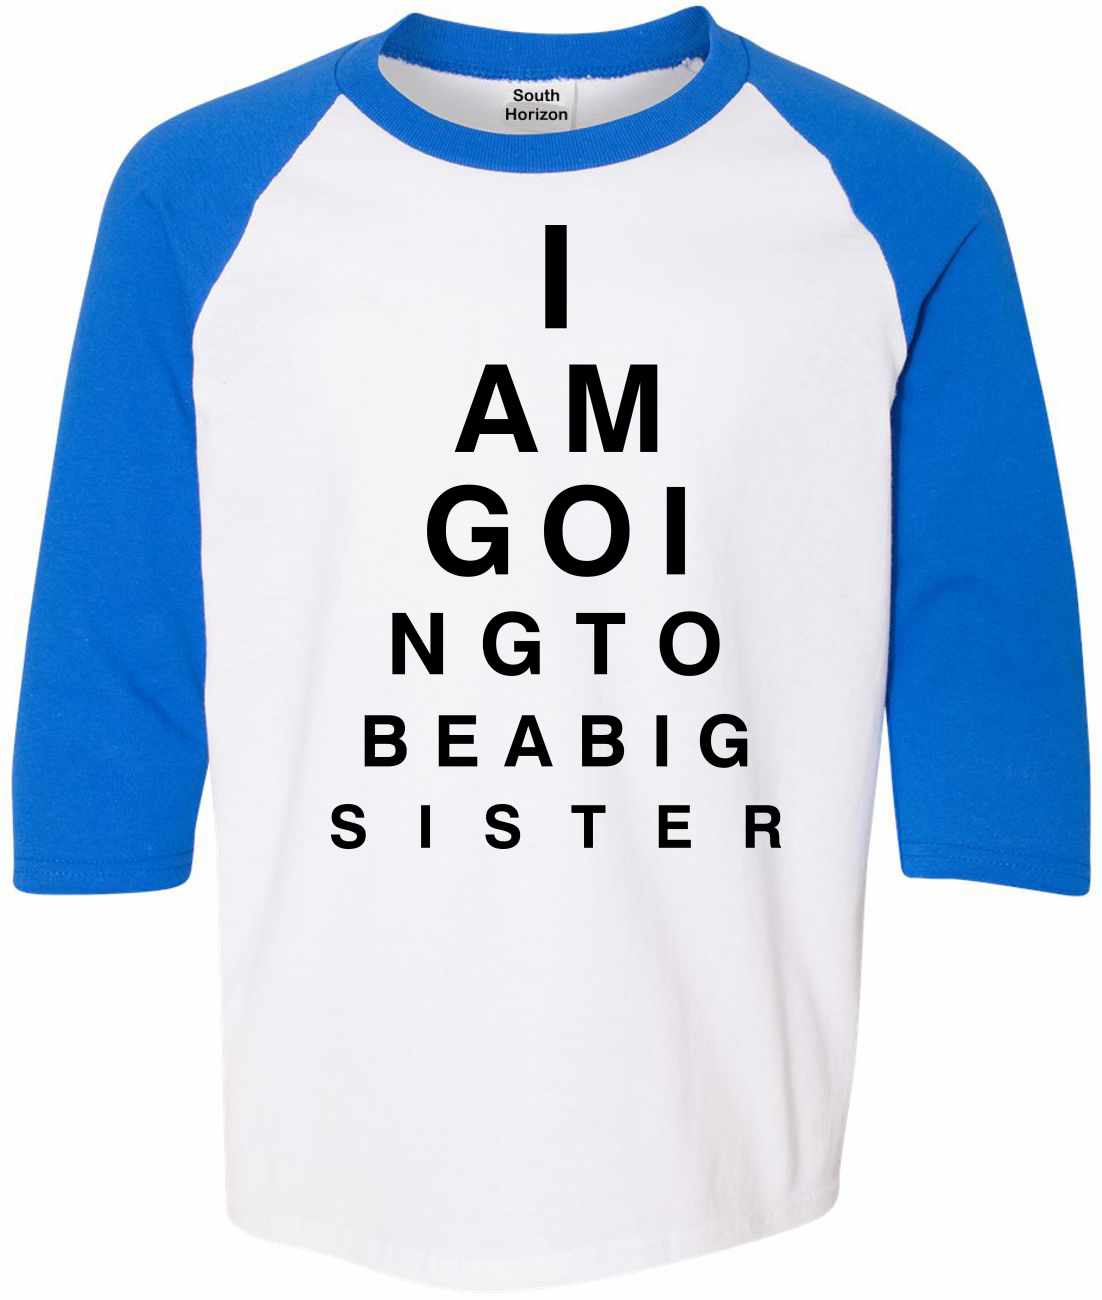 I AM GOING TO BE BIG SISTER EYE CHART on Youth Baseball Shirt (#1099-212)